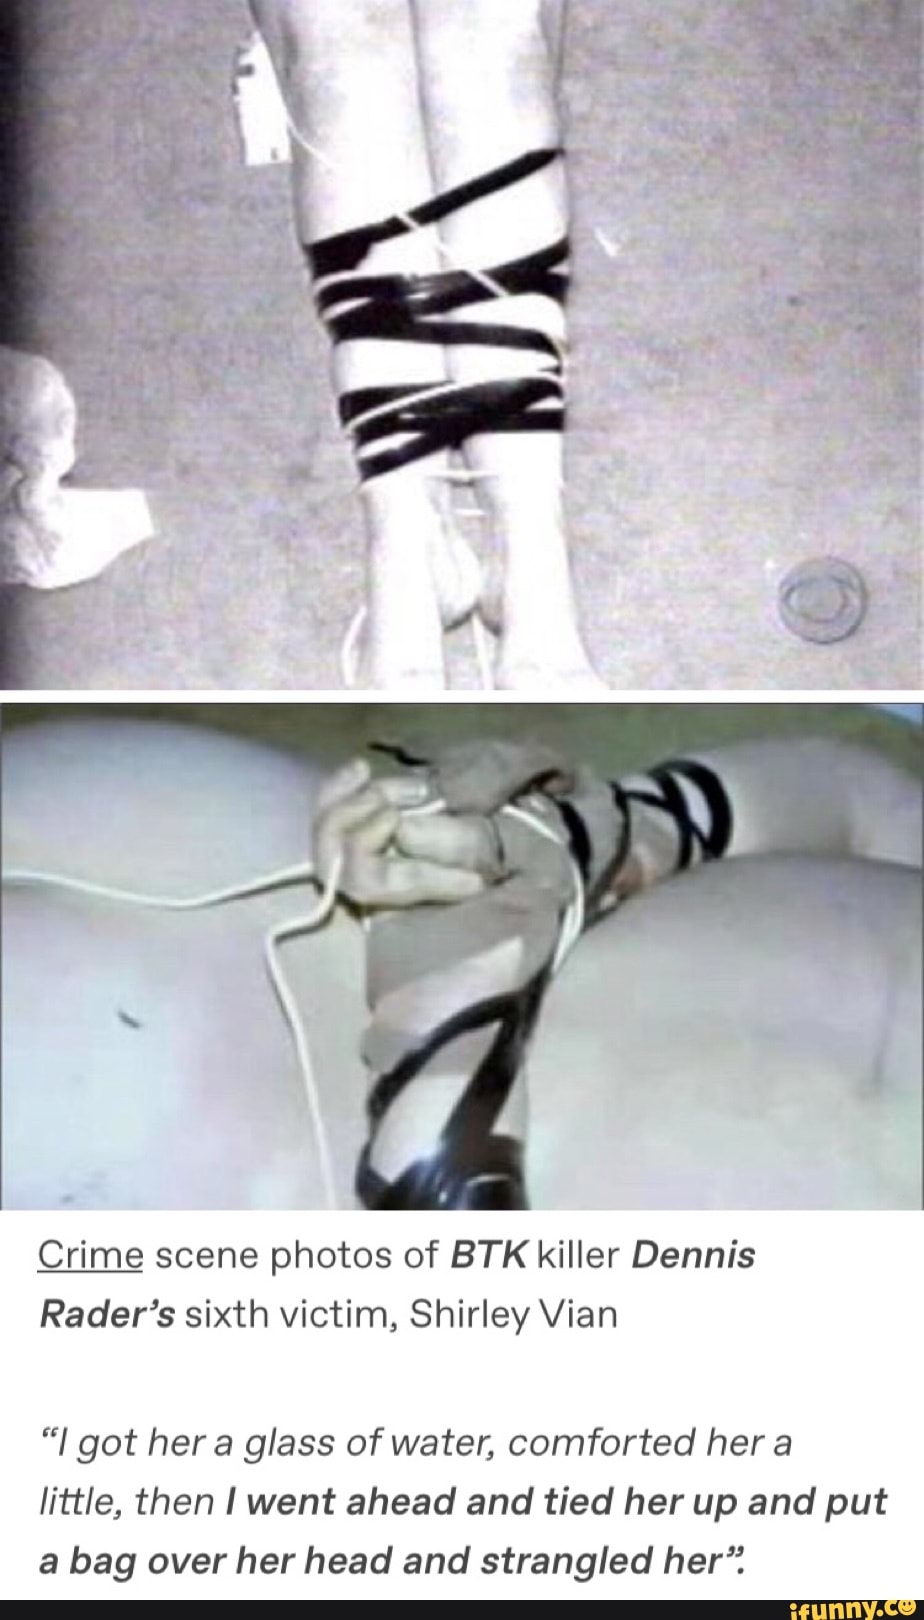 Crime Scene Photos Of Btk Killer Dennis Raders Sixth Victim Shirley